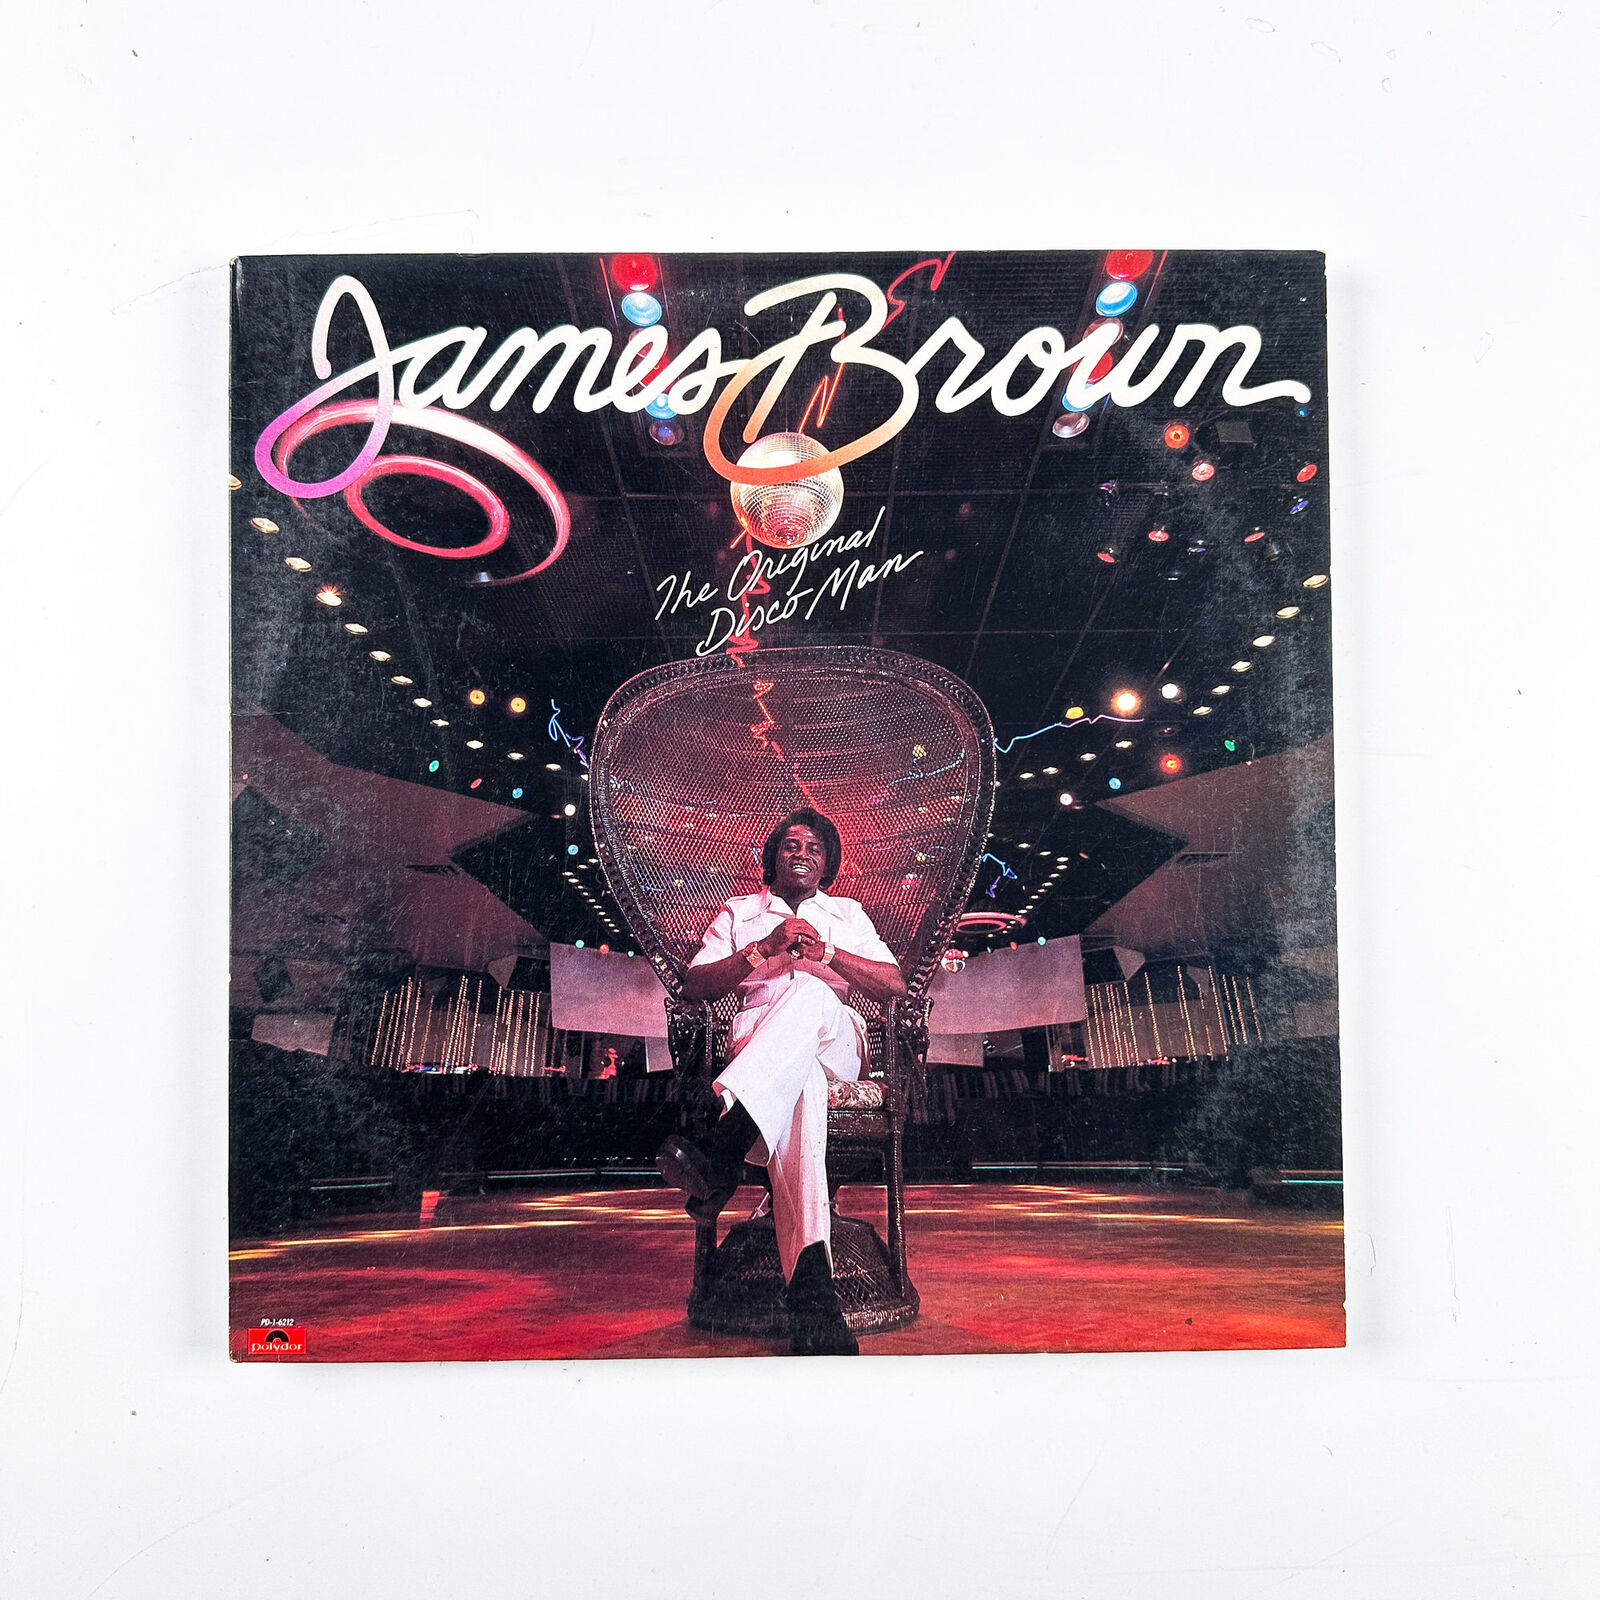 James Brown - The Original Disco Man - Vinyl LP Record - 1979